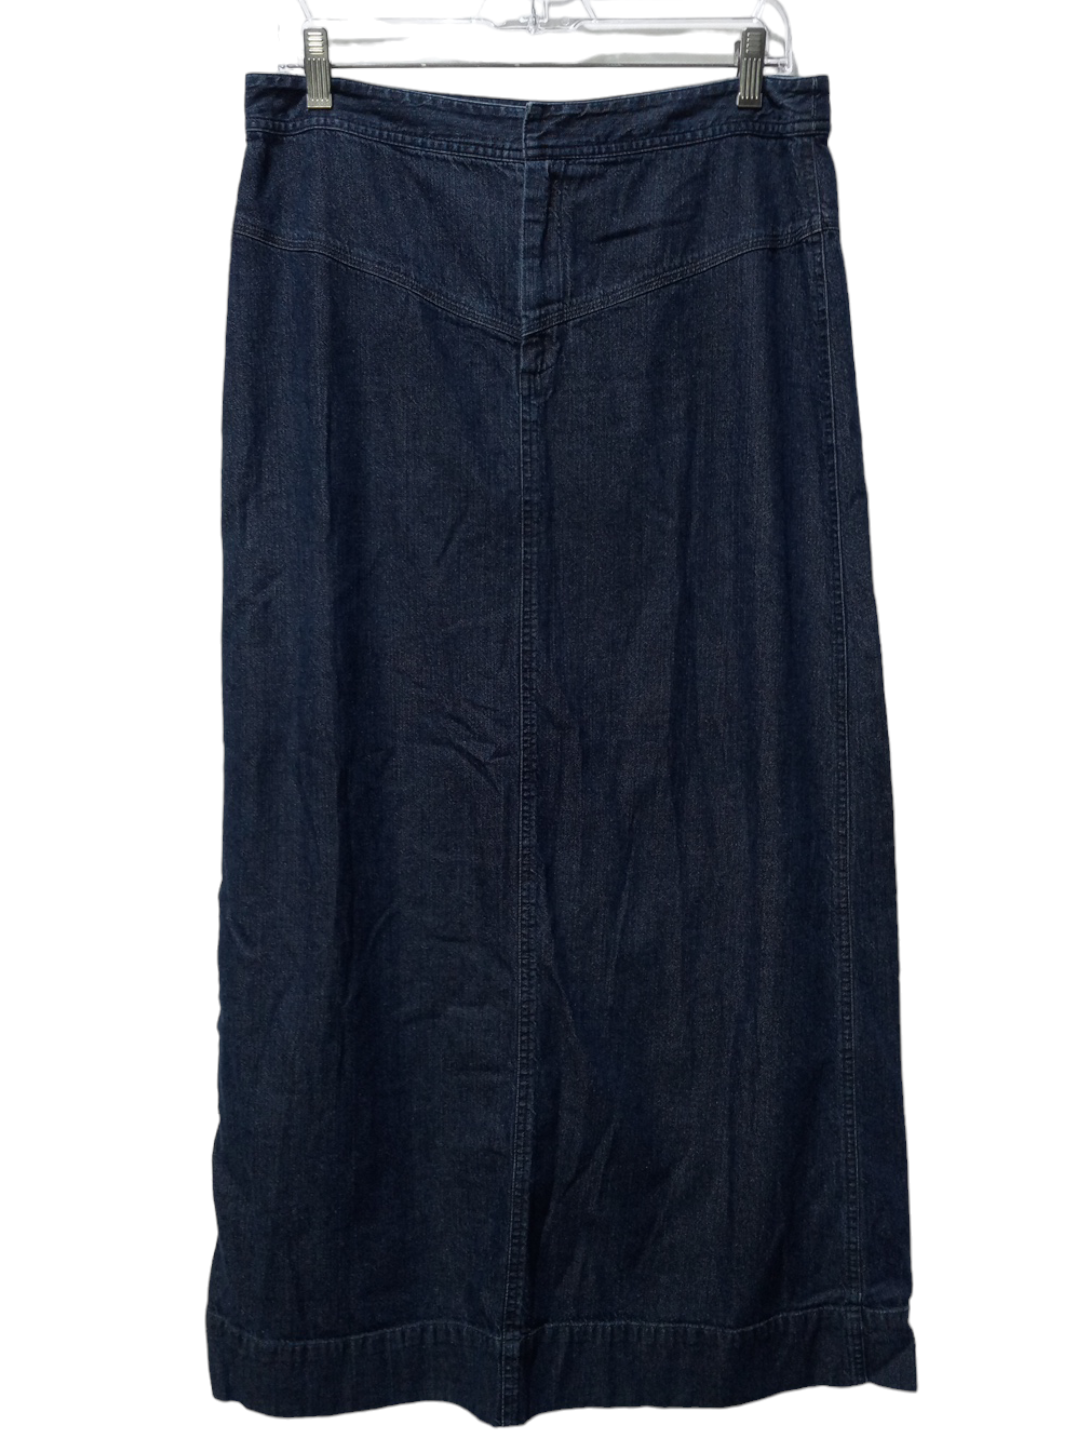 Blue Denim Skirt Maxi Banana Republic, Size 10